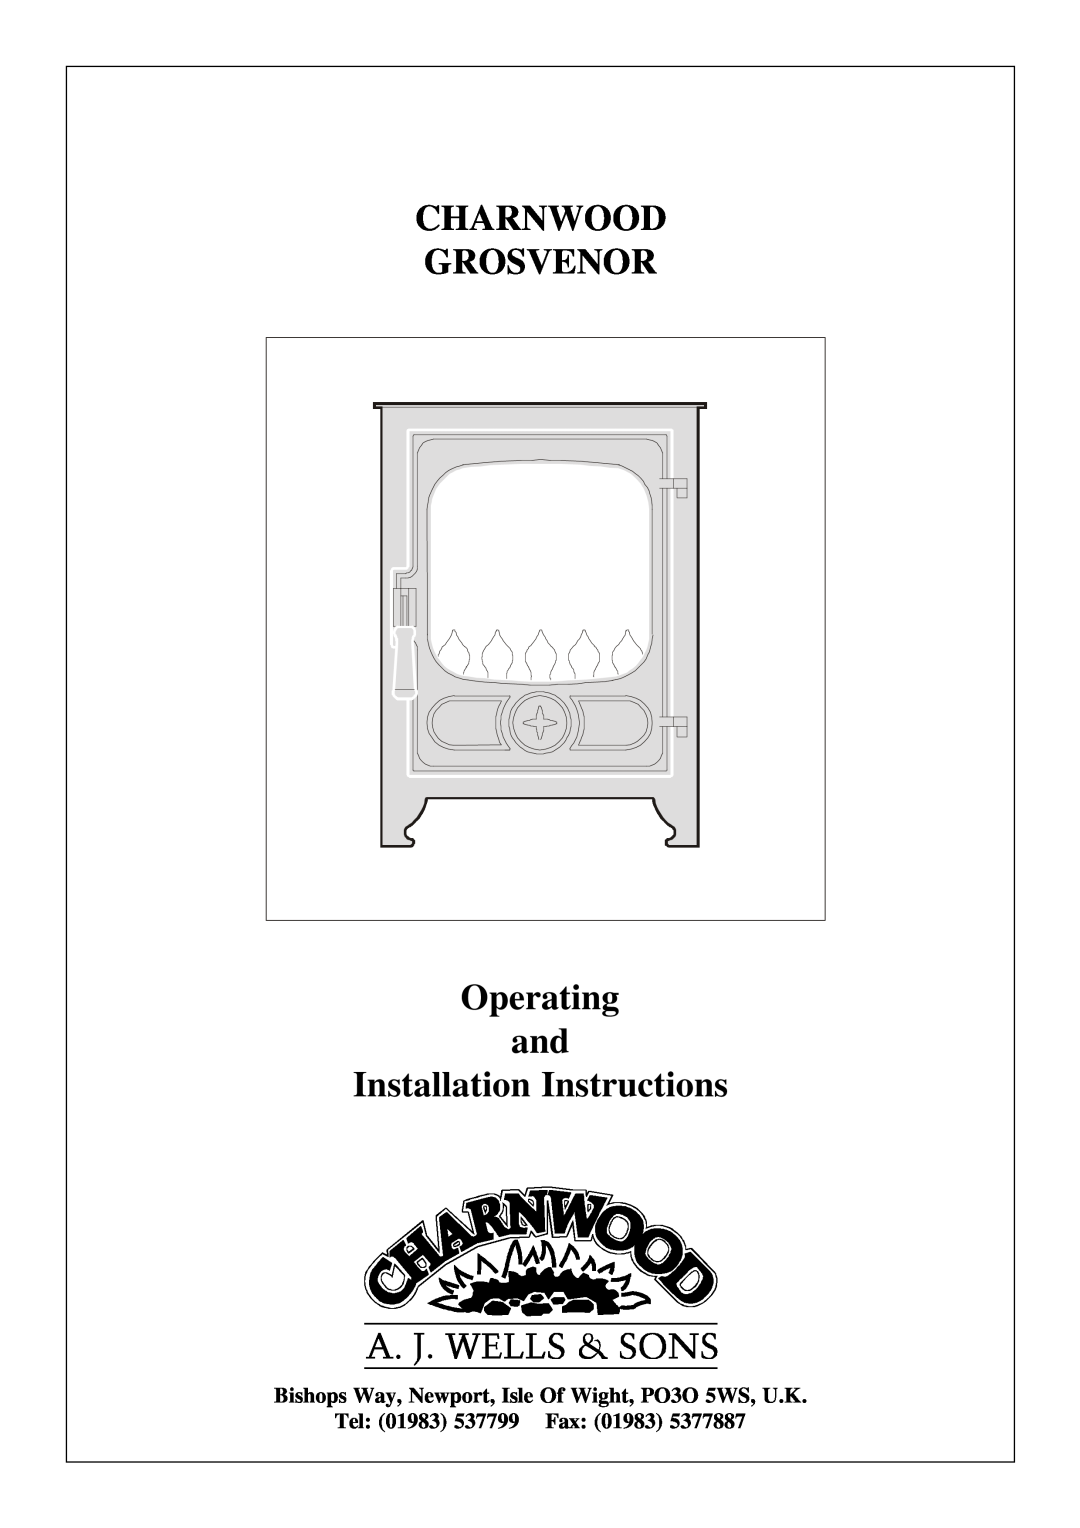 Charnwood Grosvenor installation instructions CHARNWOOD GROSVENOR Operating and Installation Instructions 